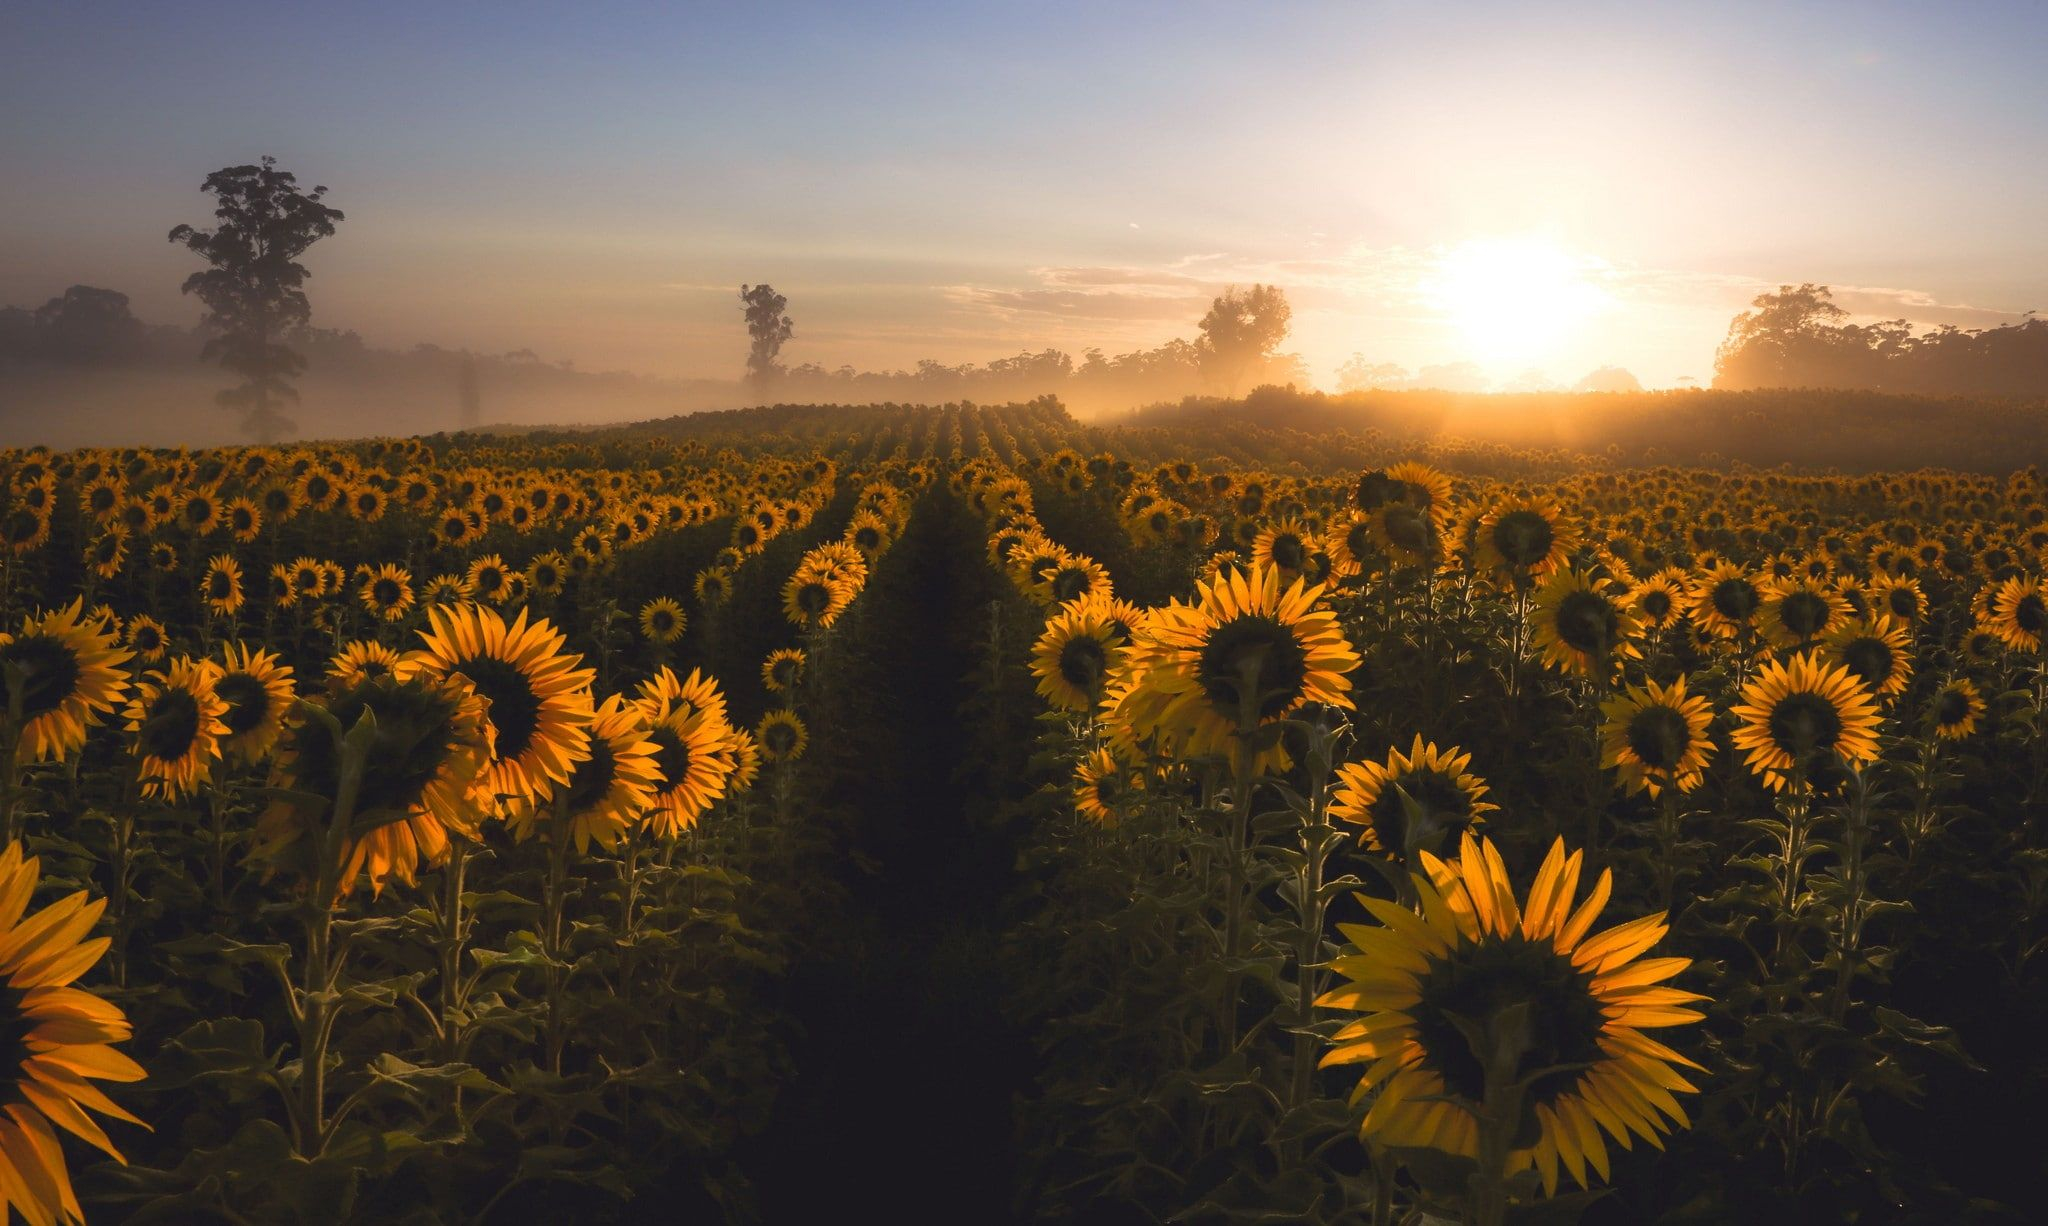 2048x1226 nature #sunflowers #mist #field #flowers #1080P #wallpaper #hdwallpaper #desktop | Sunrise wallpaper, Field wallpaper, Sunrise images